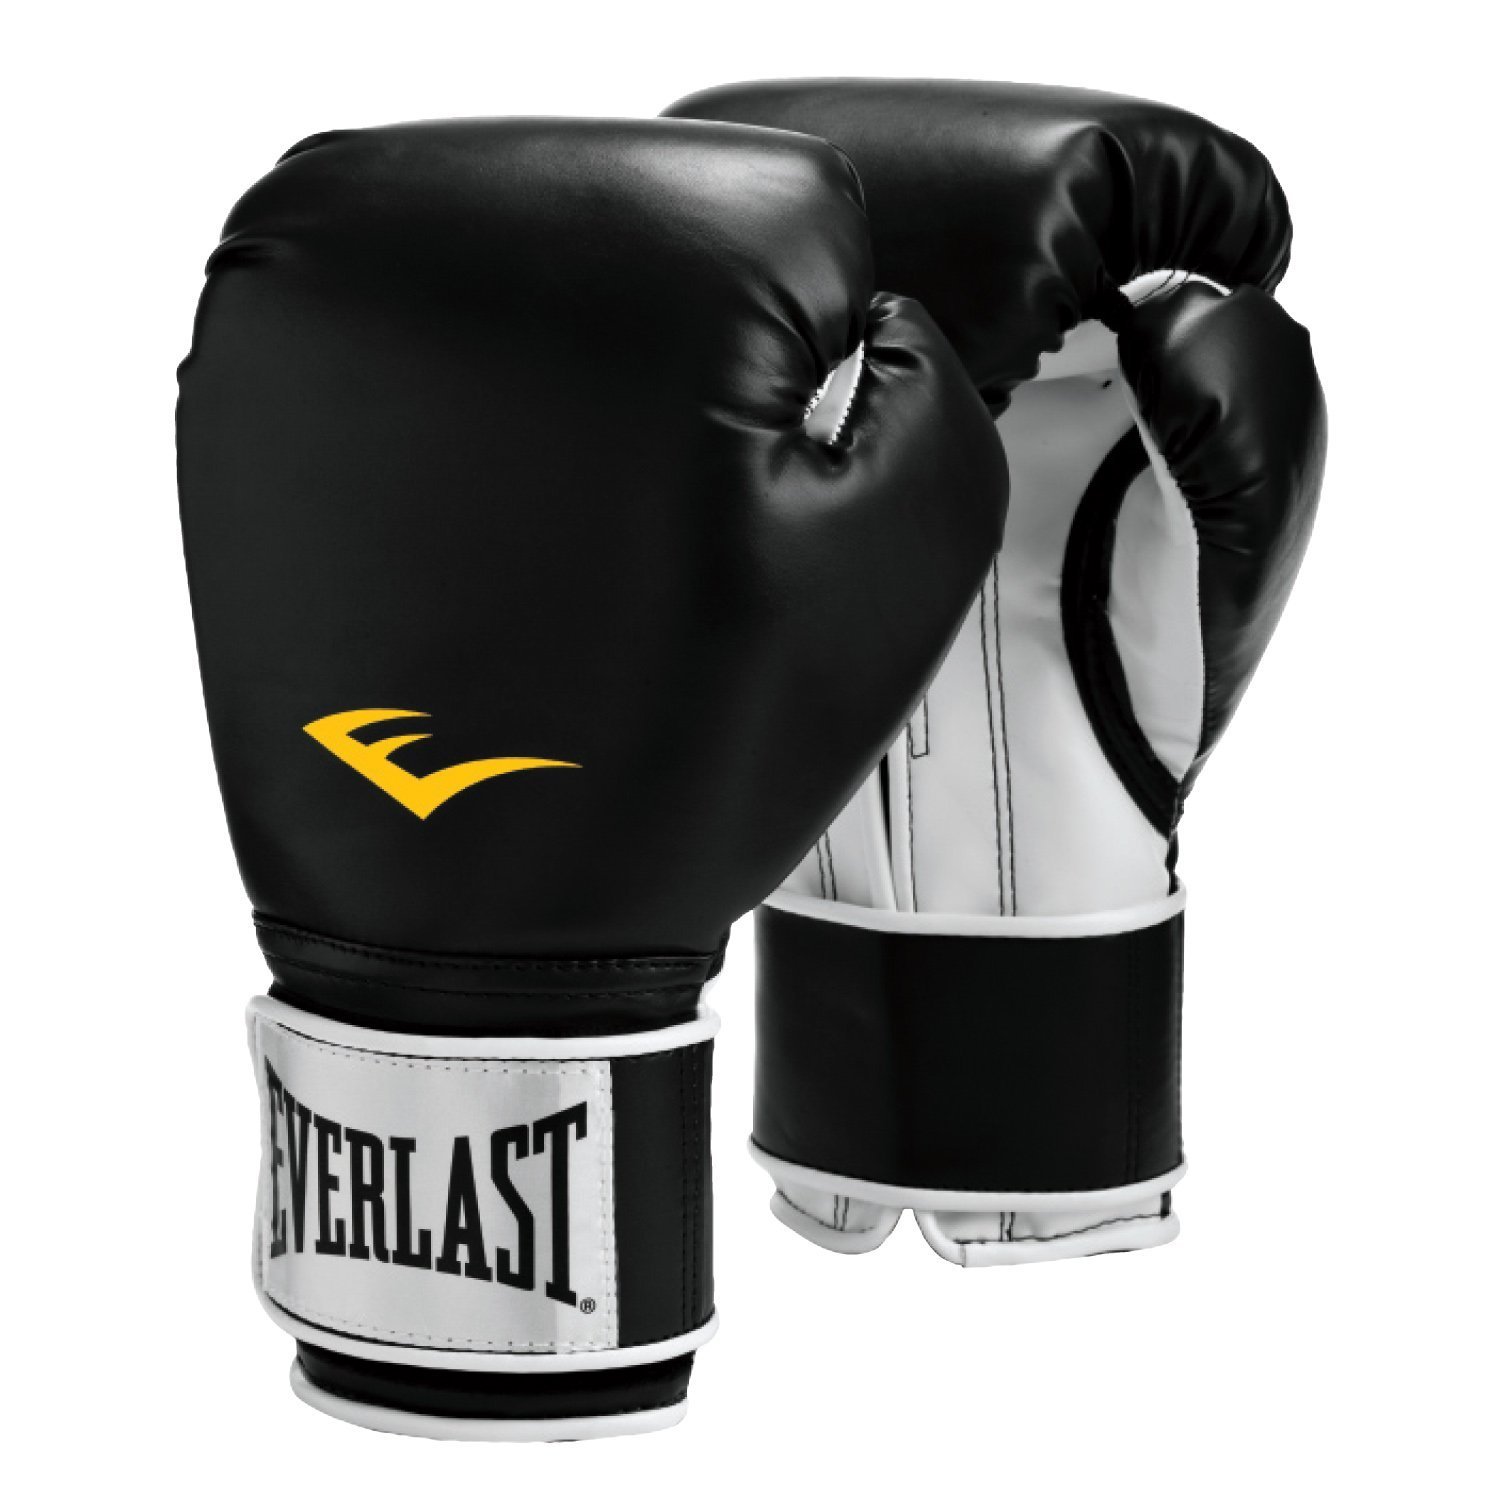 best boxing glove brands